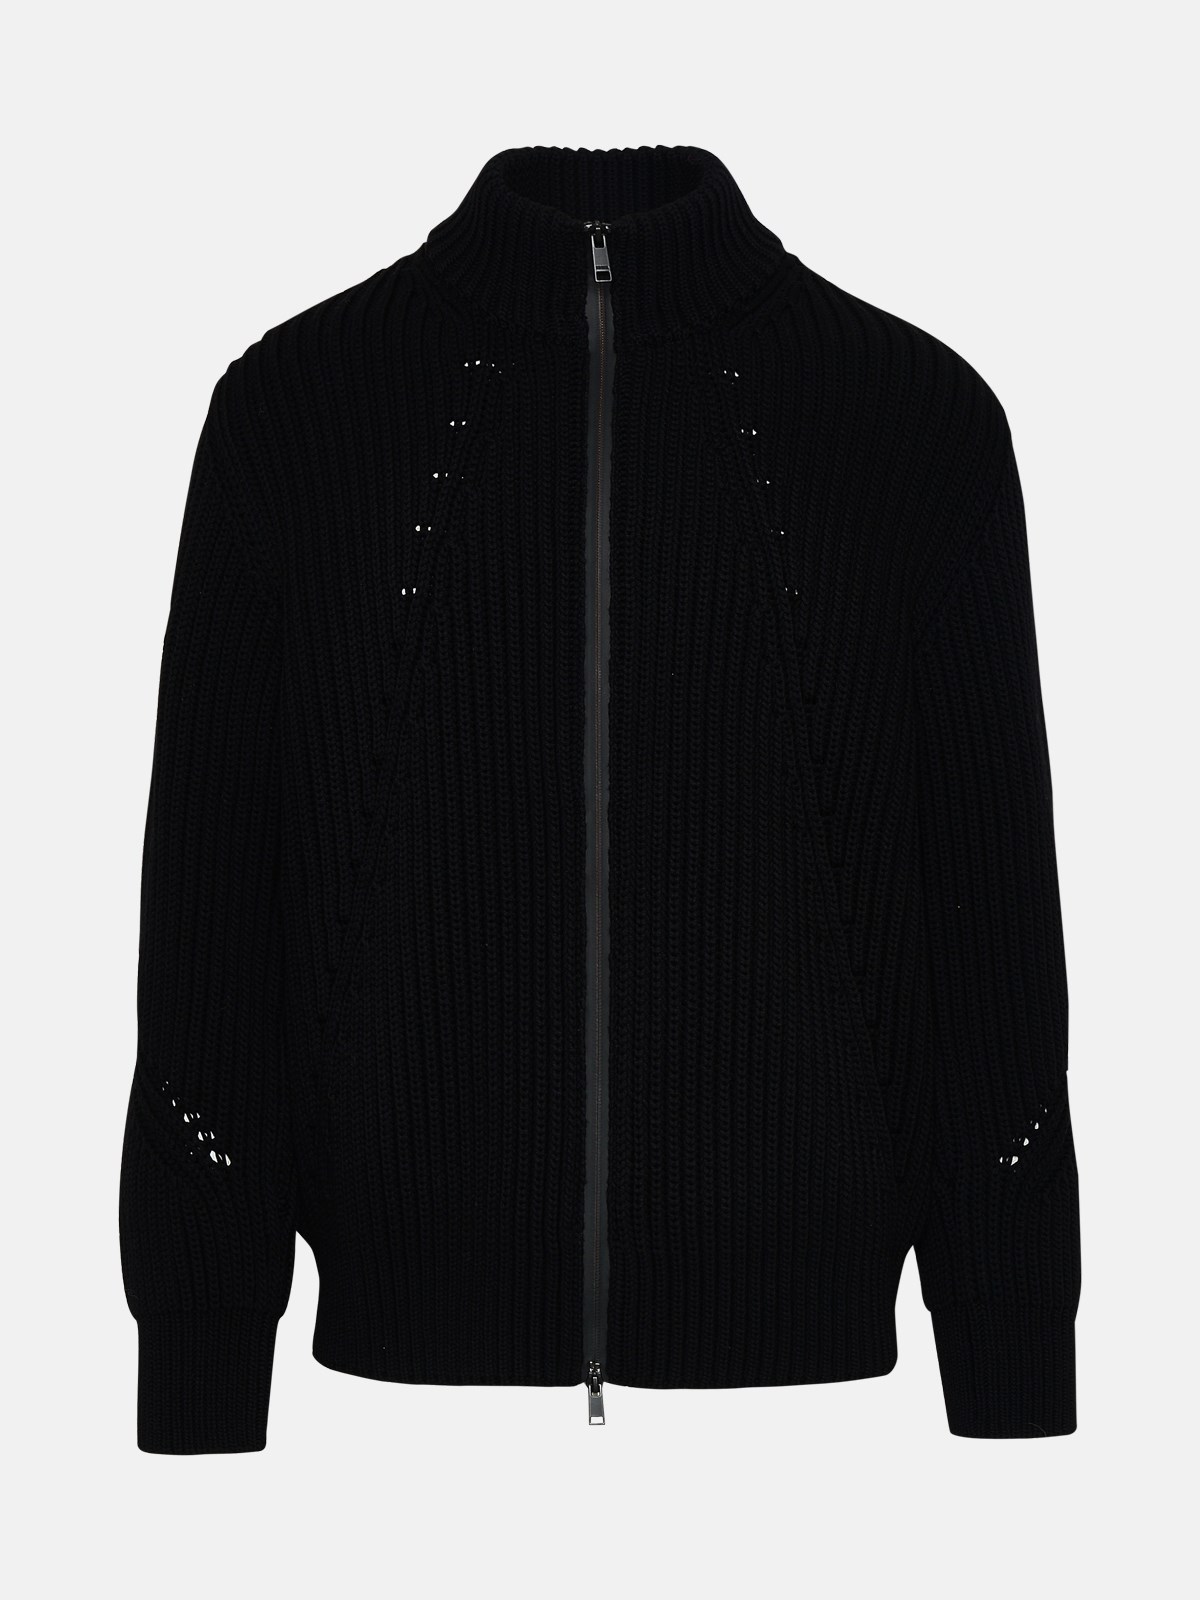 Zegna Black Wool Blend Sweater